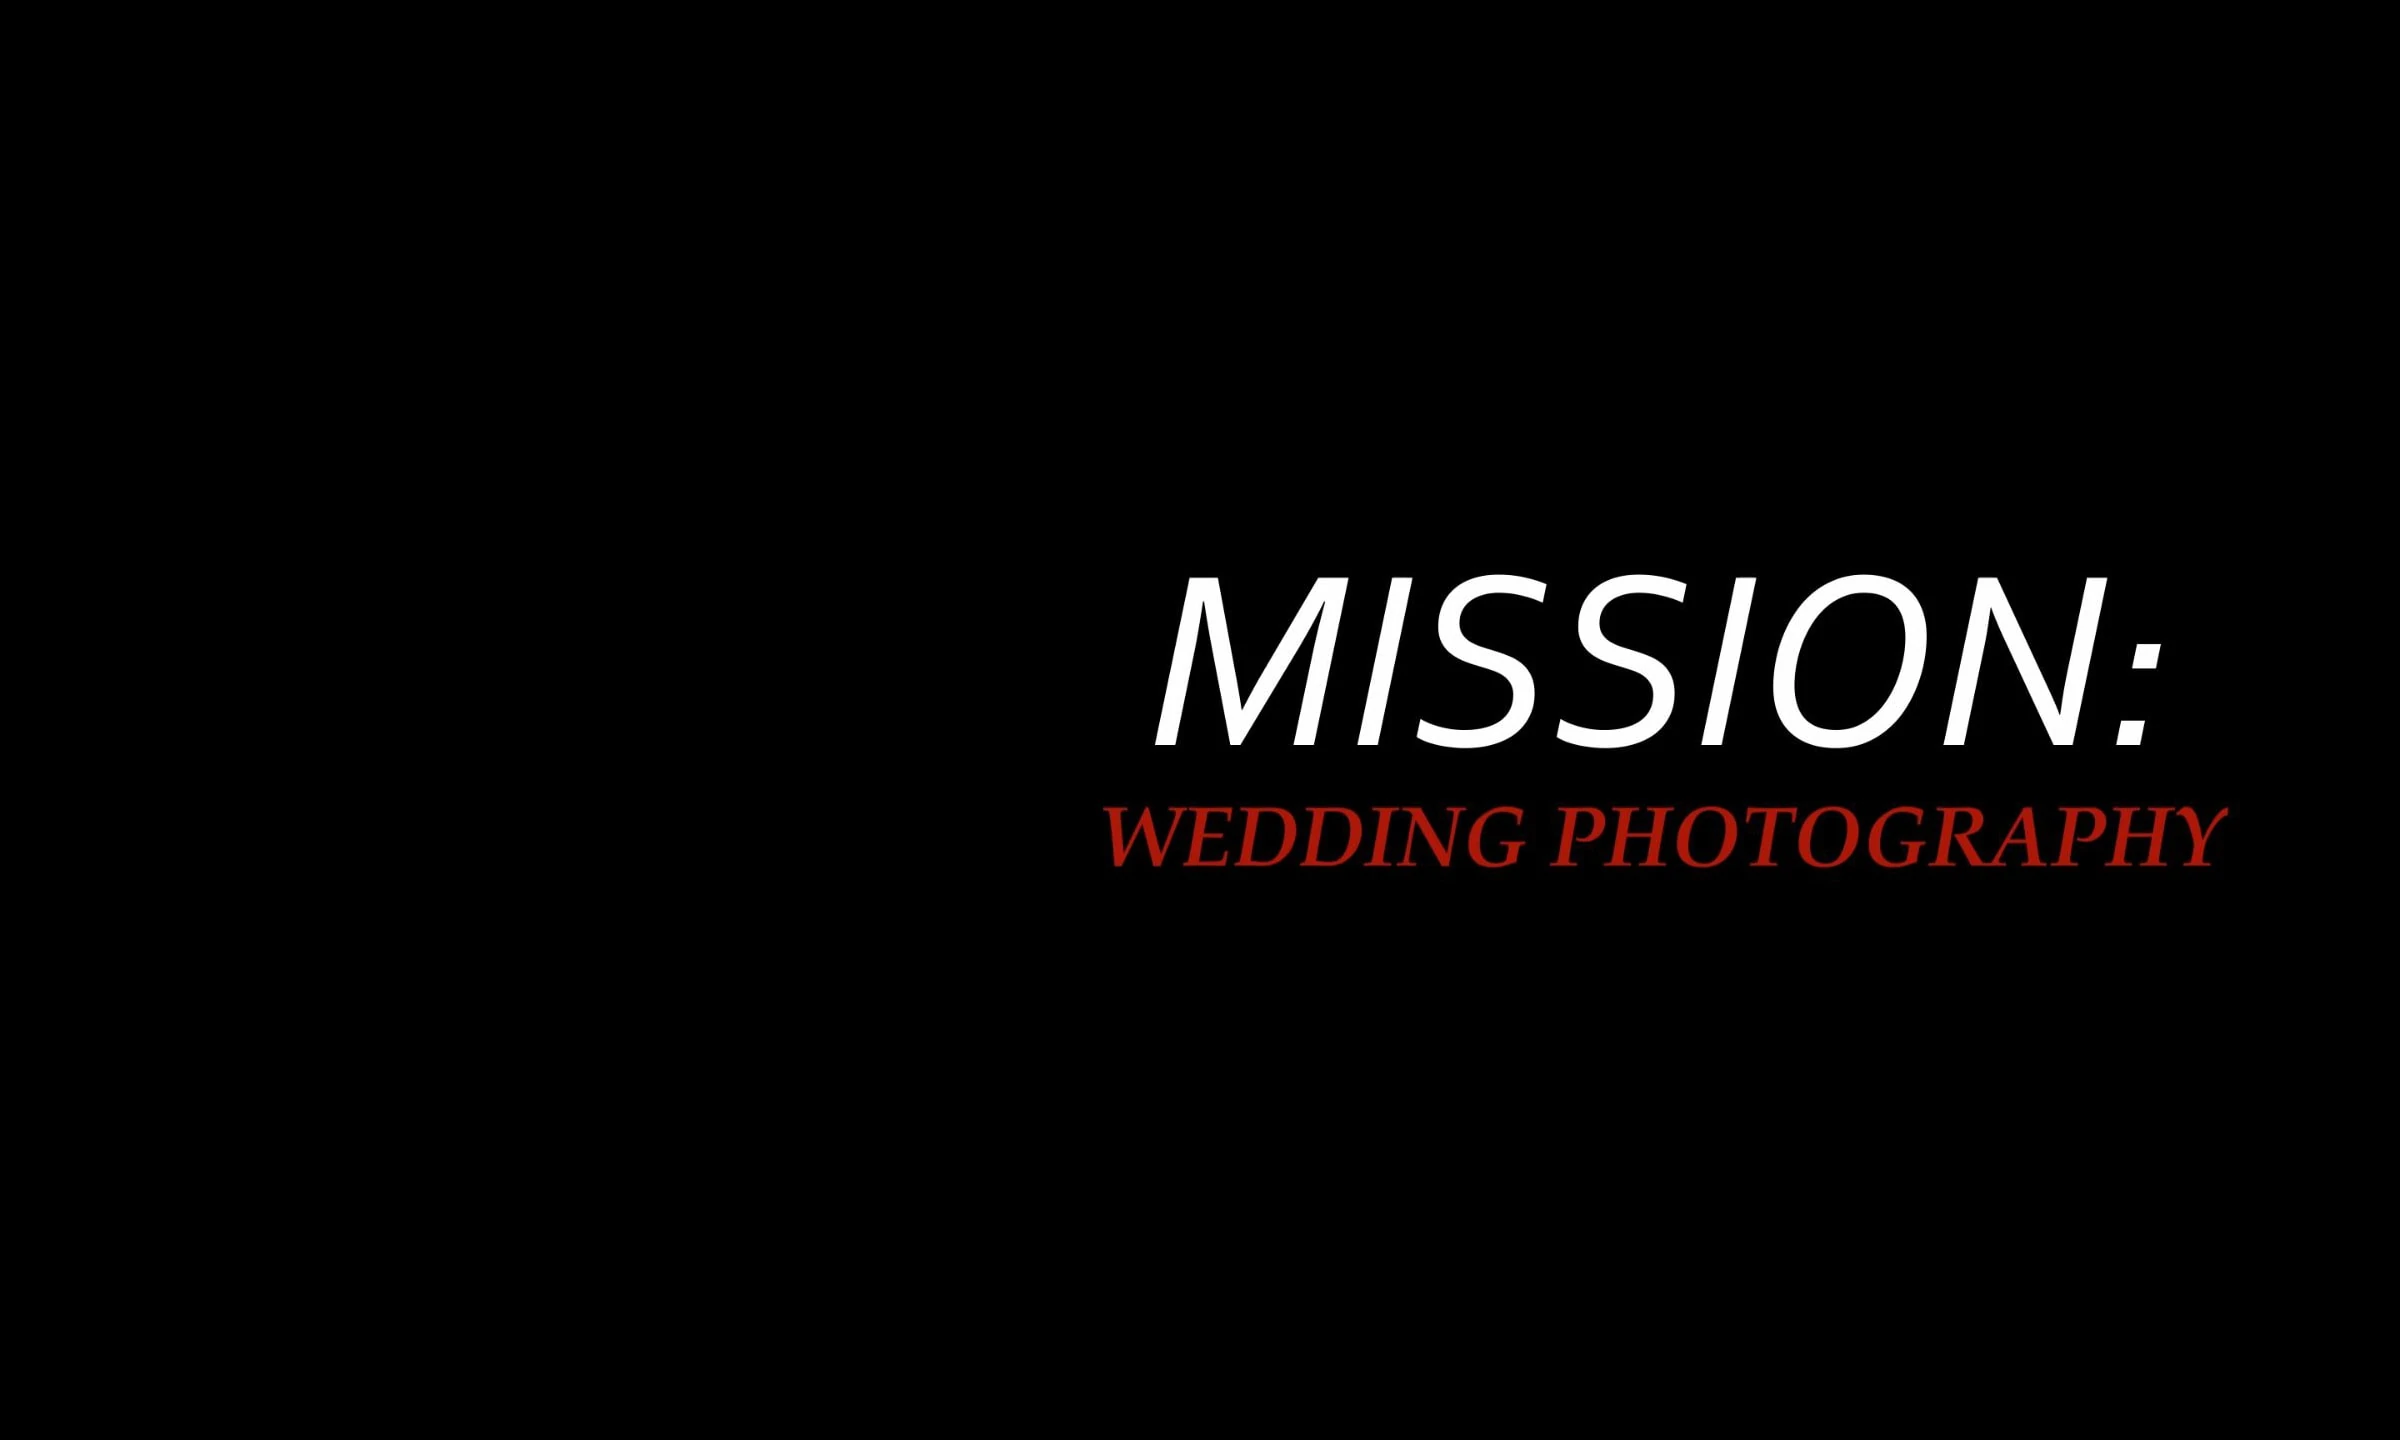 Mission: Wedding Photography